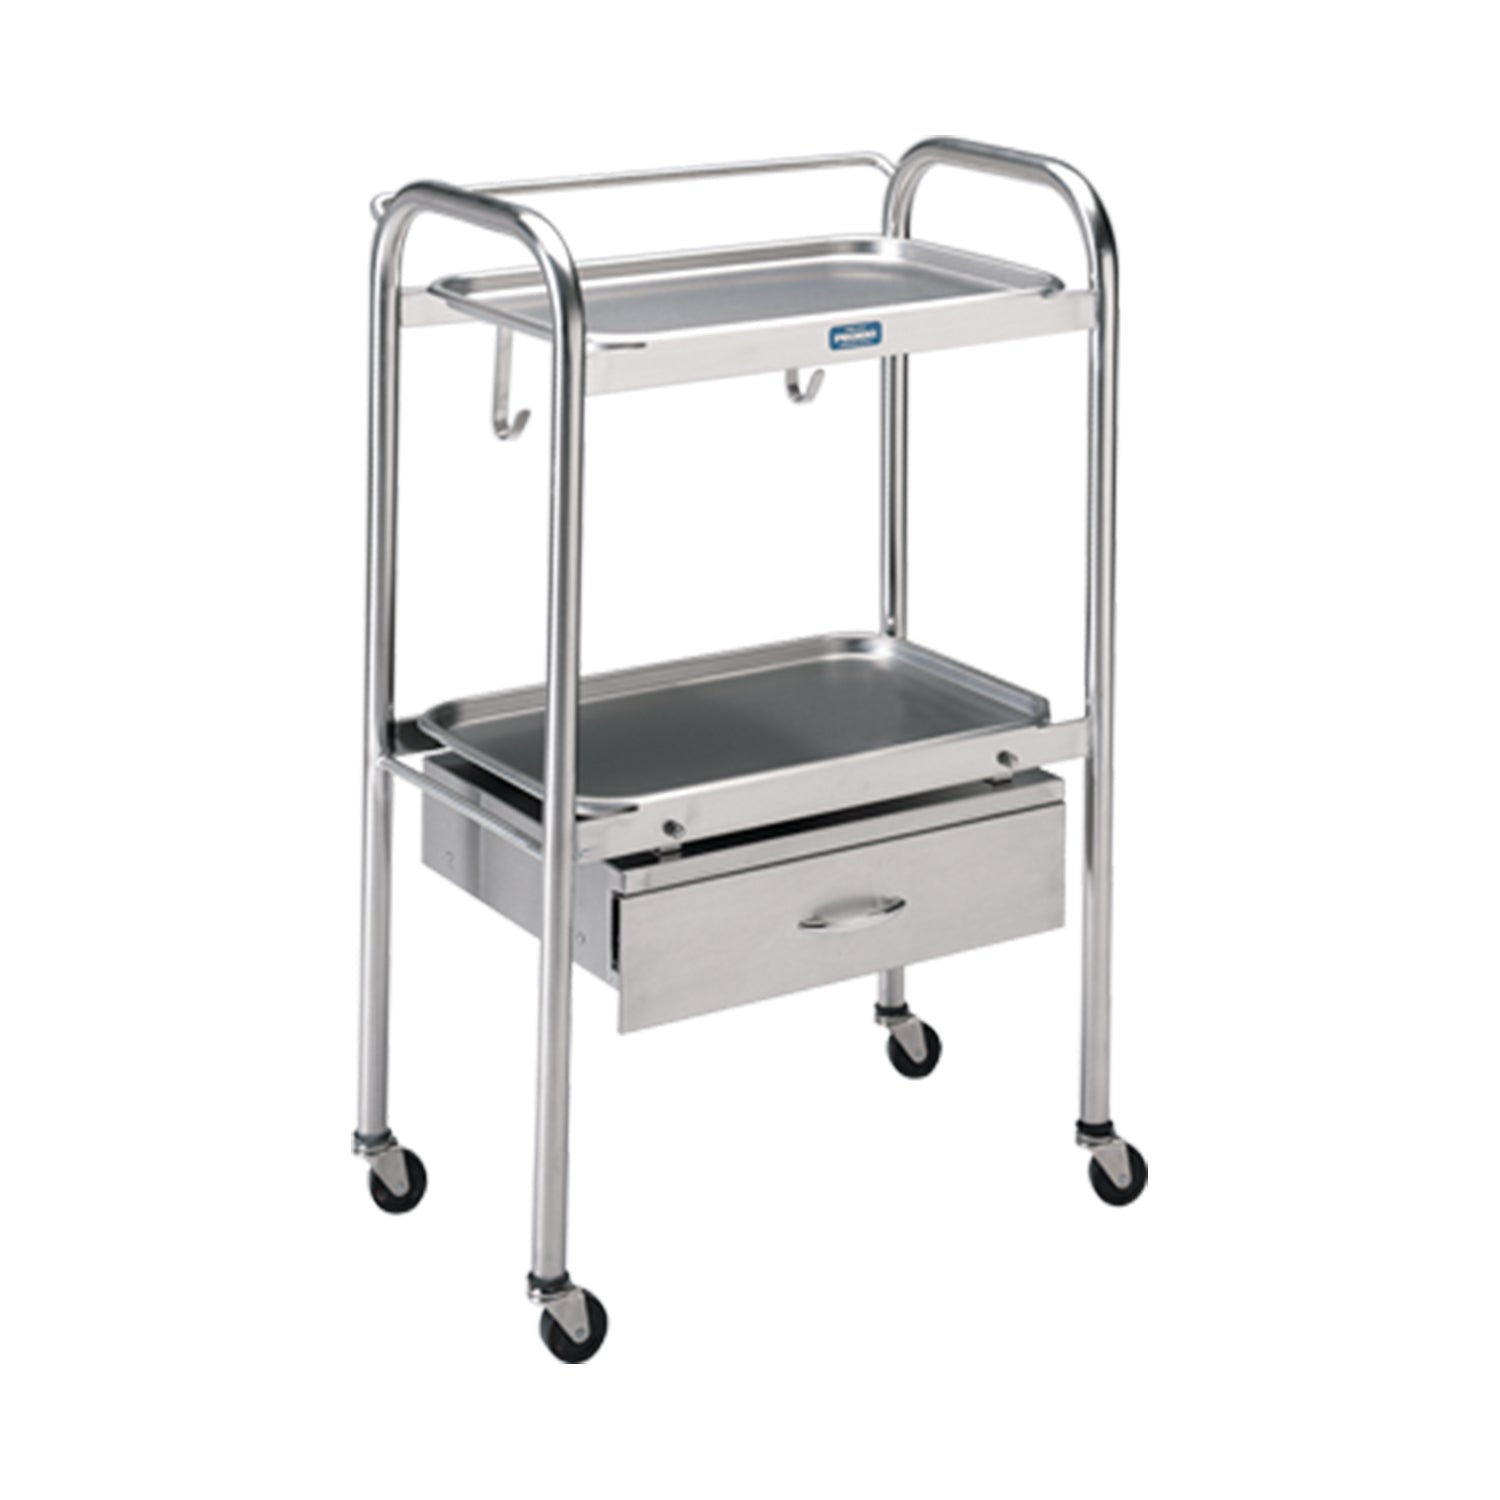 Accessory: Pedigo Anesthetist Carts and Cabinets